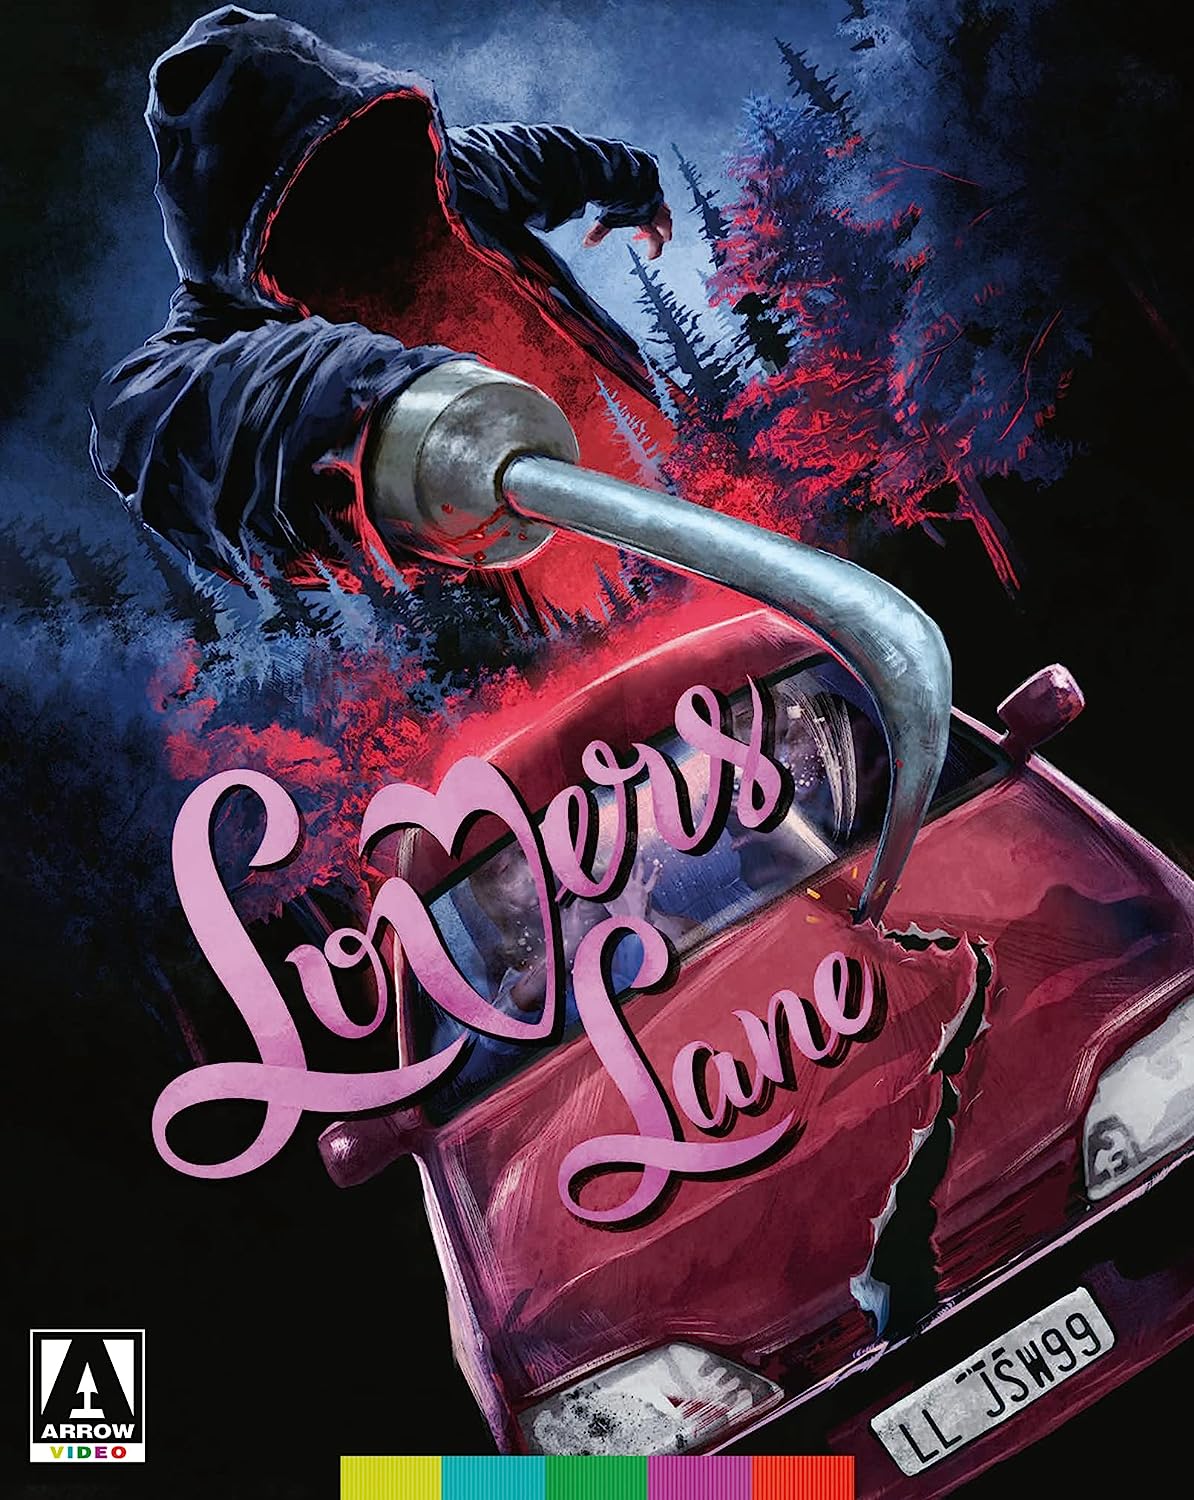 Lover's Lane (Arrow Video) - Darkside Records